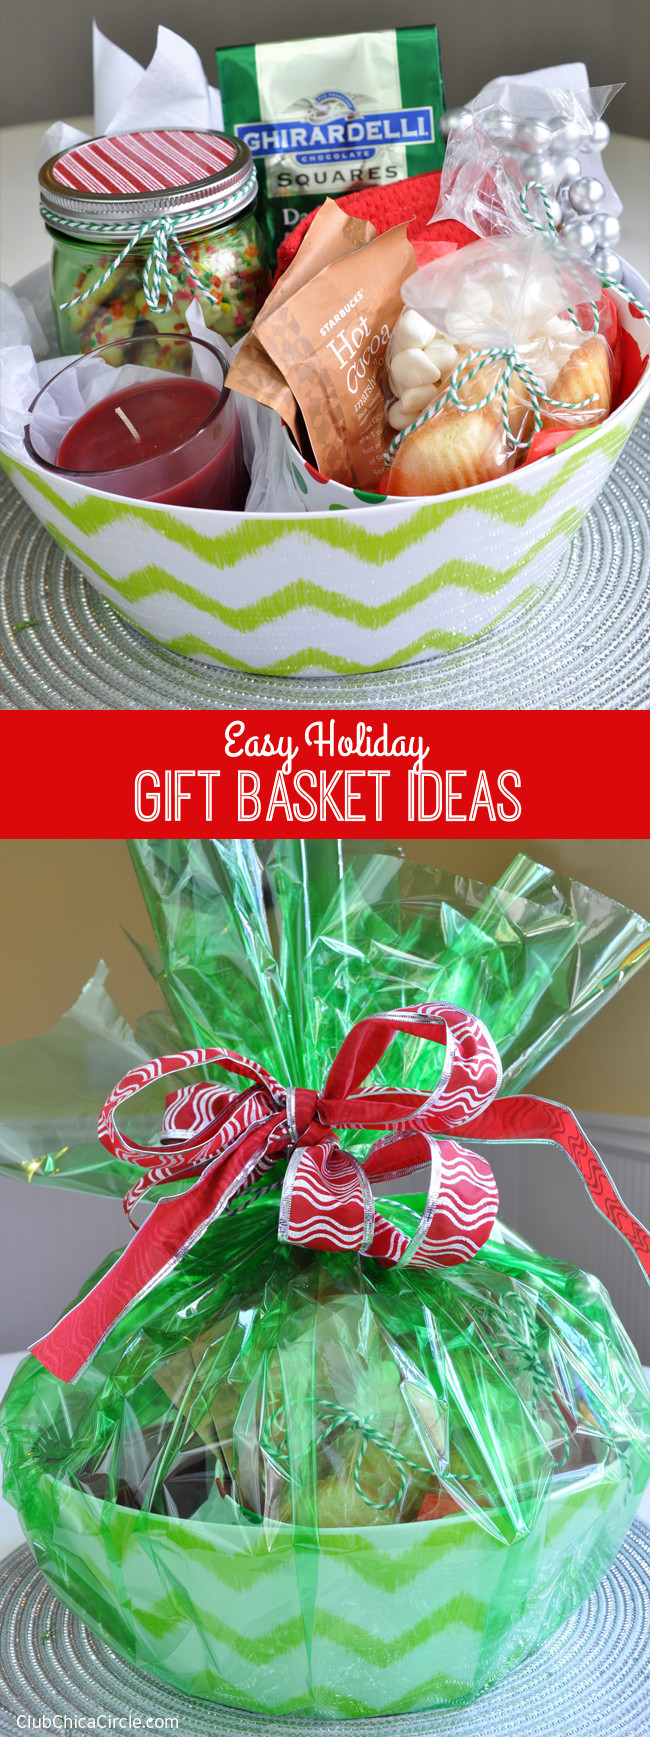 Christmas Basket DIY
 Easy Holiday Gift Basket Ideas Giveaway